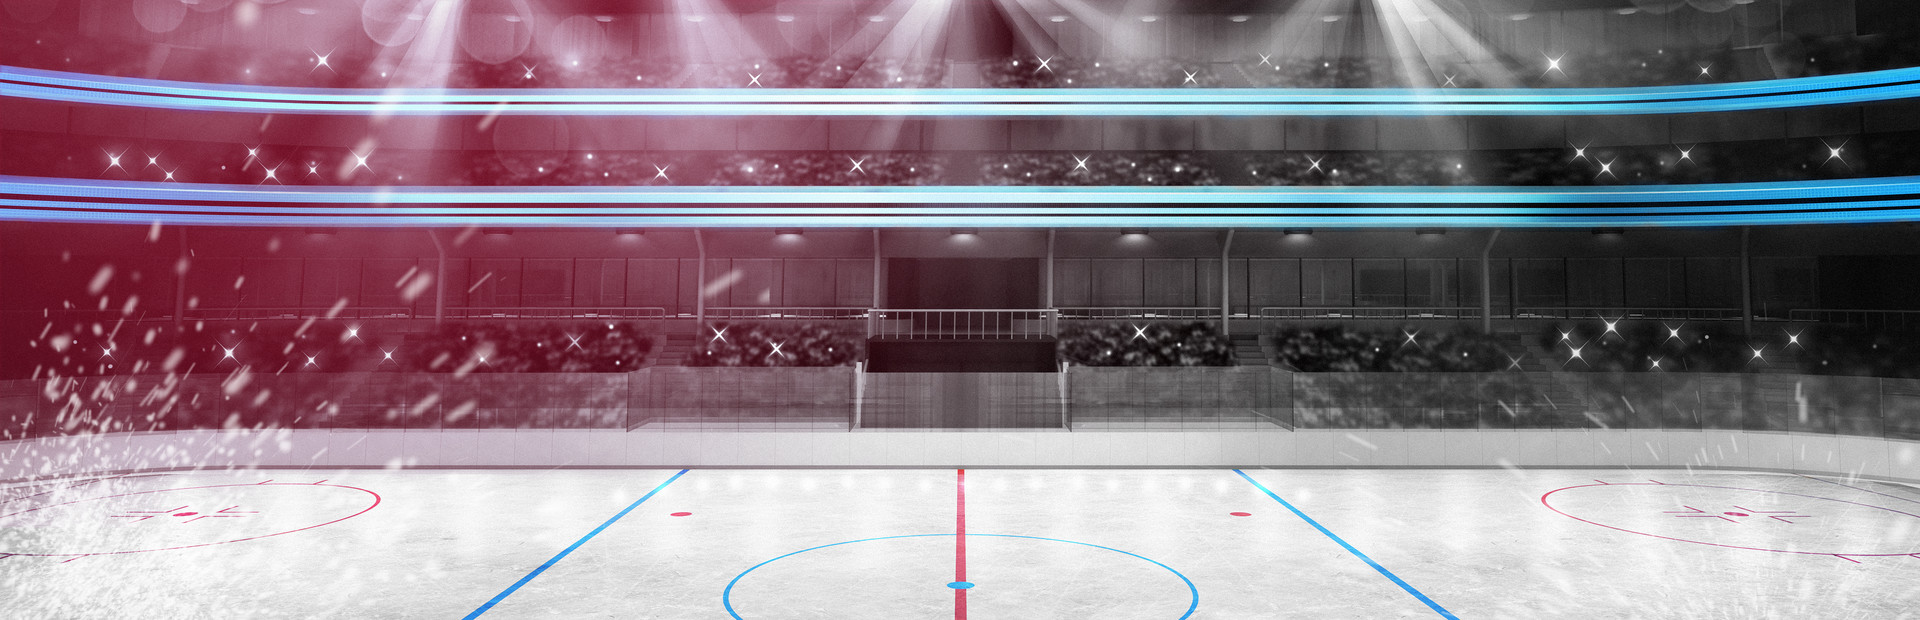 Franchise Hockey Manager 6 cover image